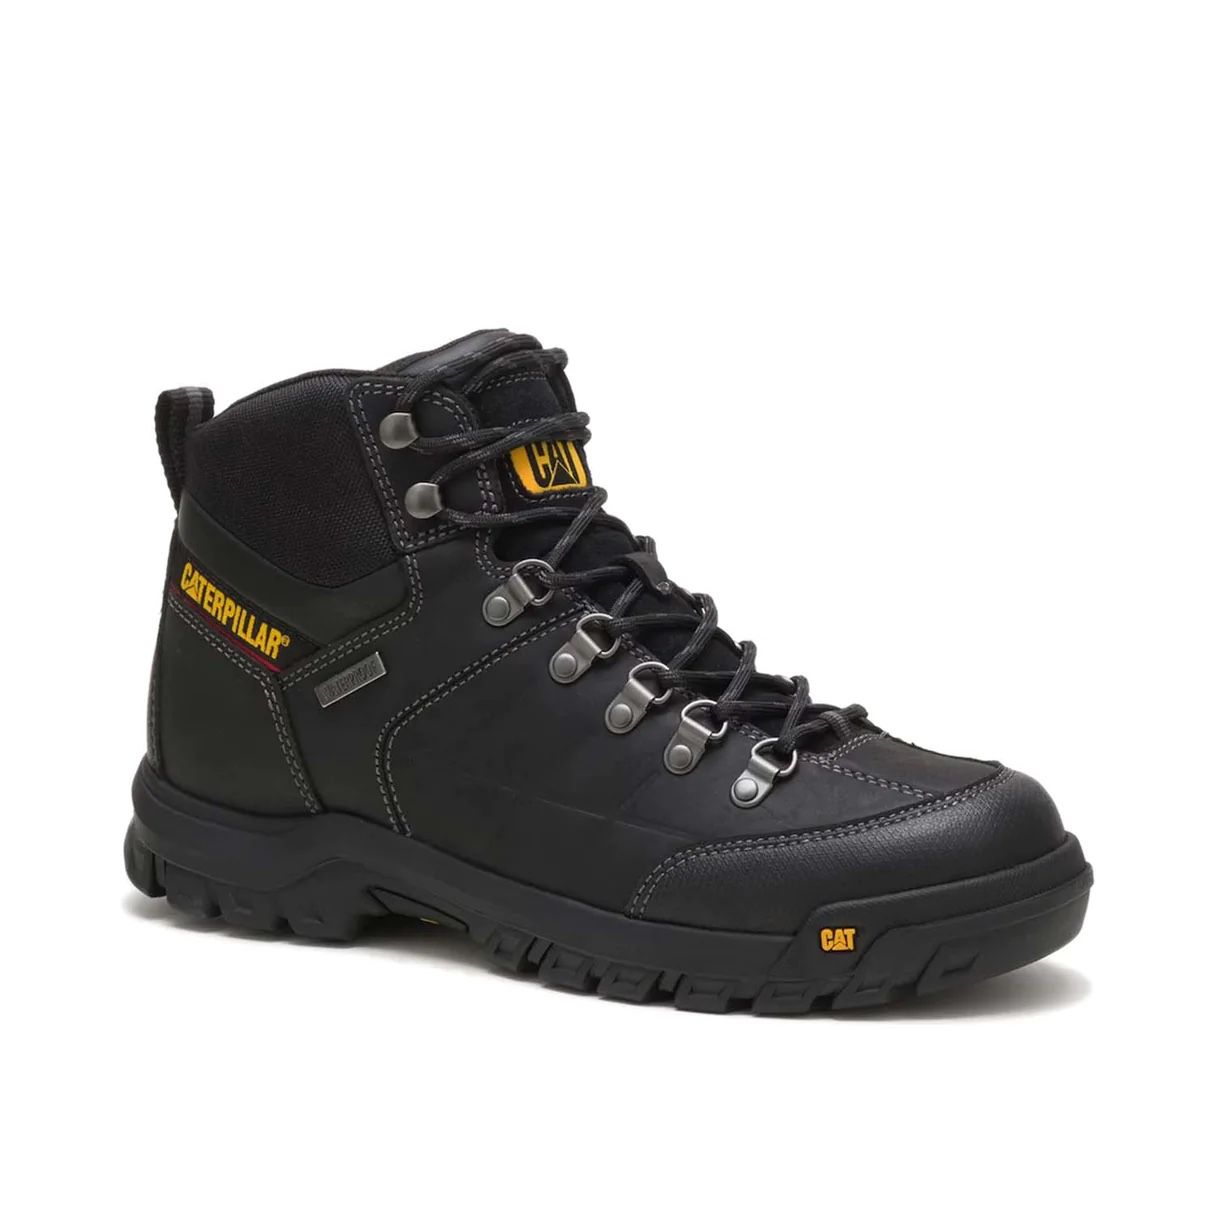 Cat Footwear Men's Threshold Waterproof Soft Toe Work Boot, Black Size 13 M